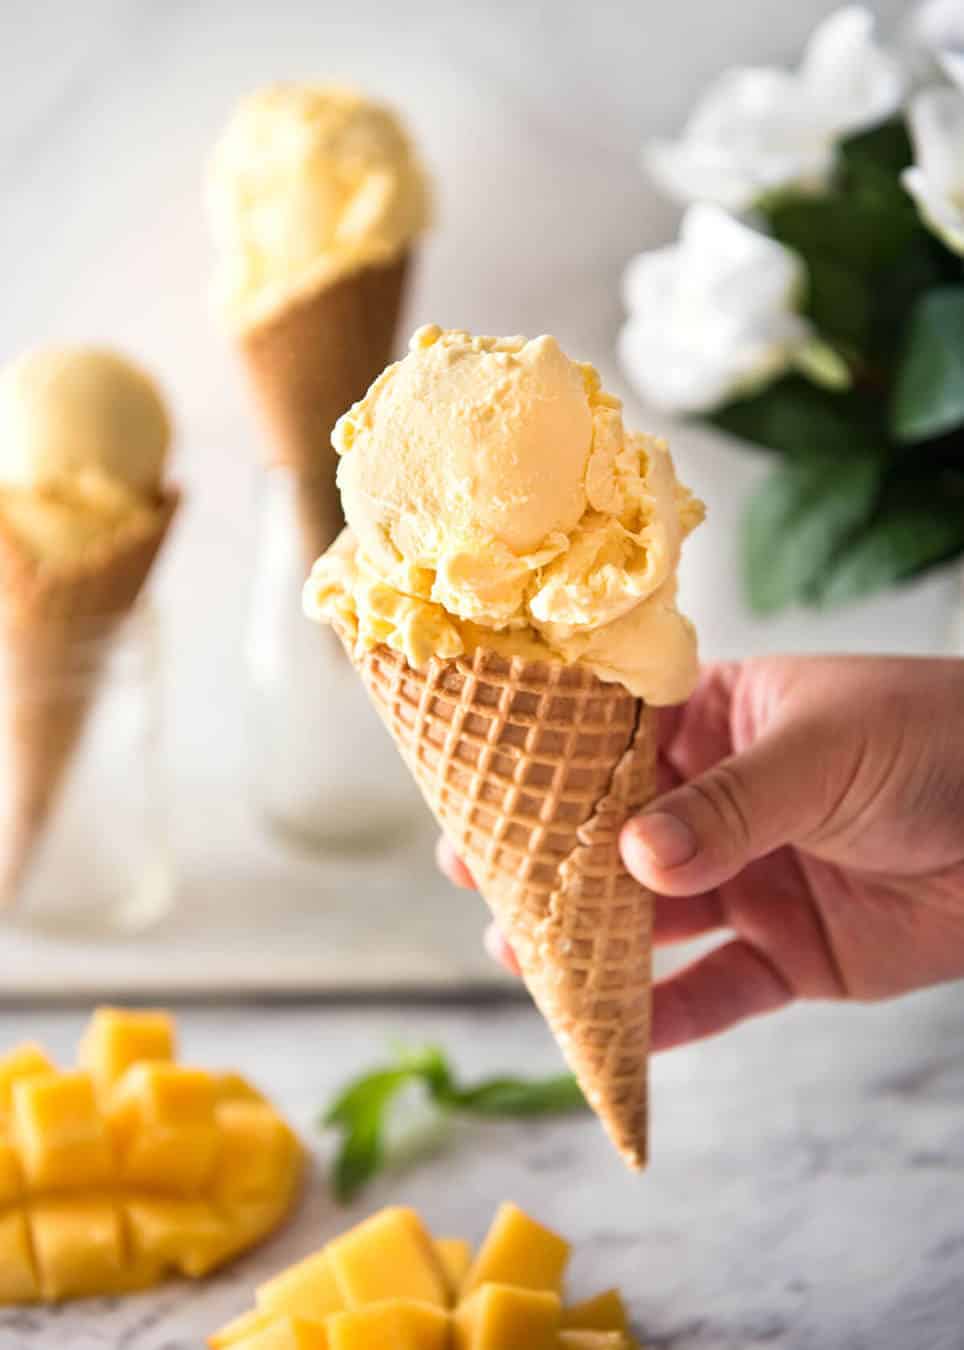 Ice cream cone with mango ice cream held in a hand.